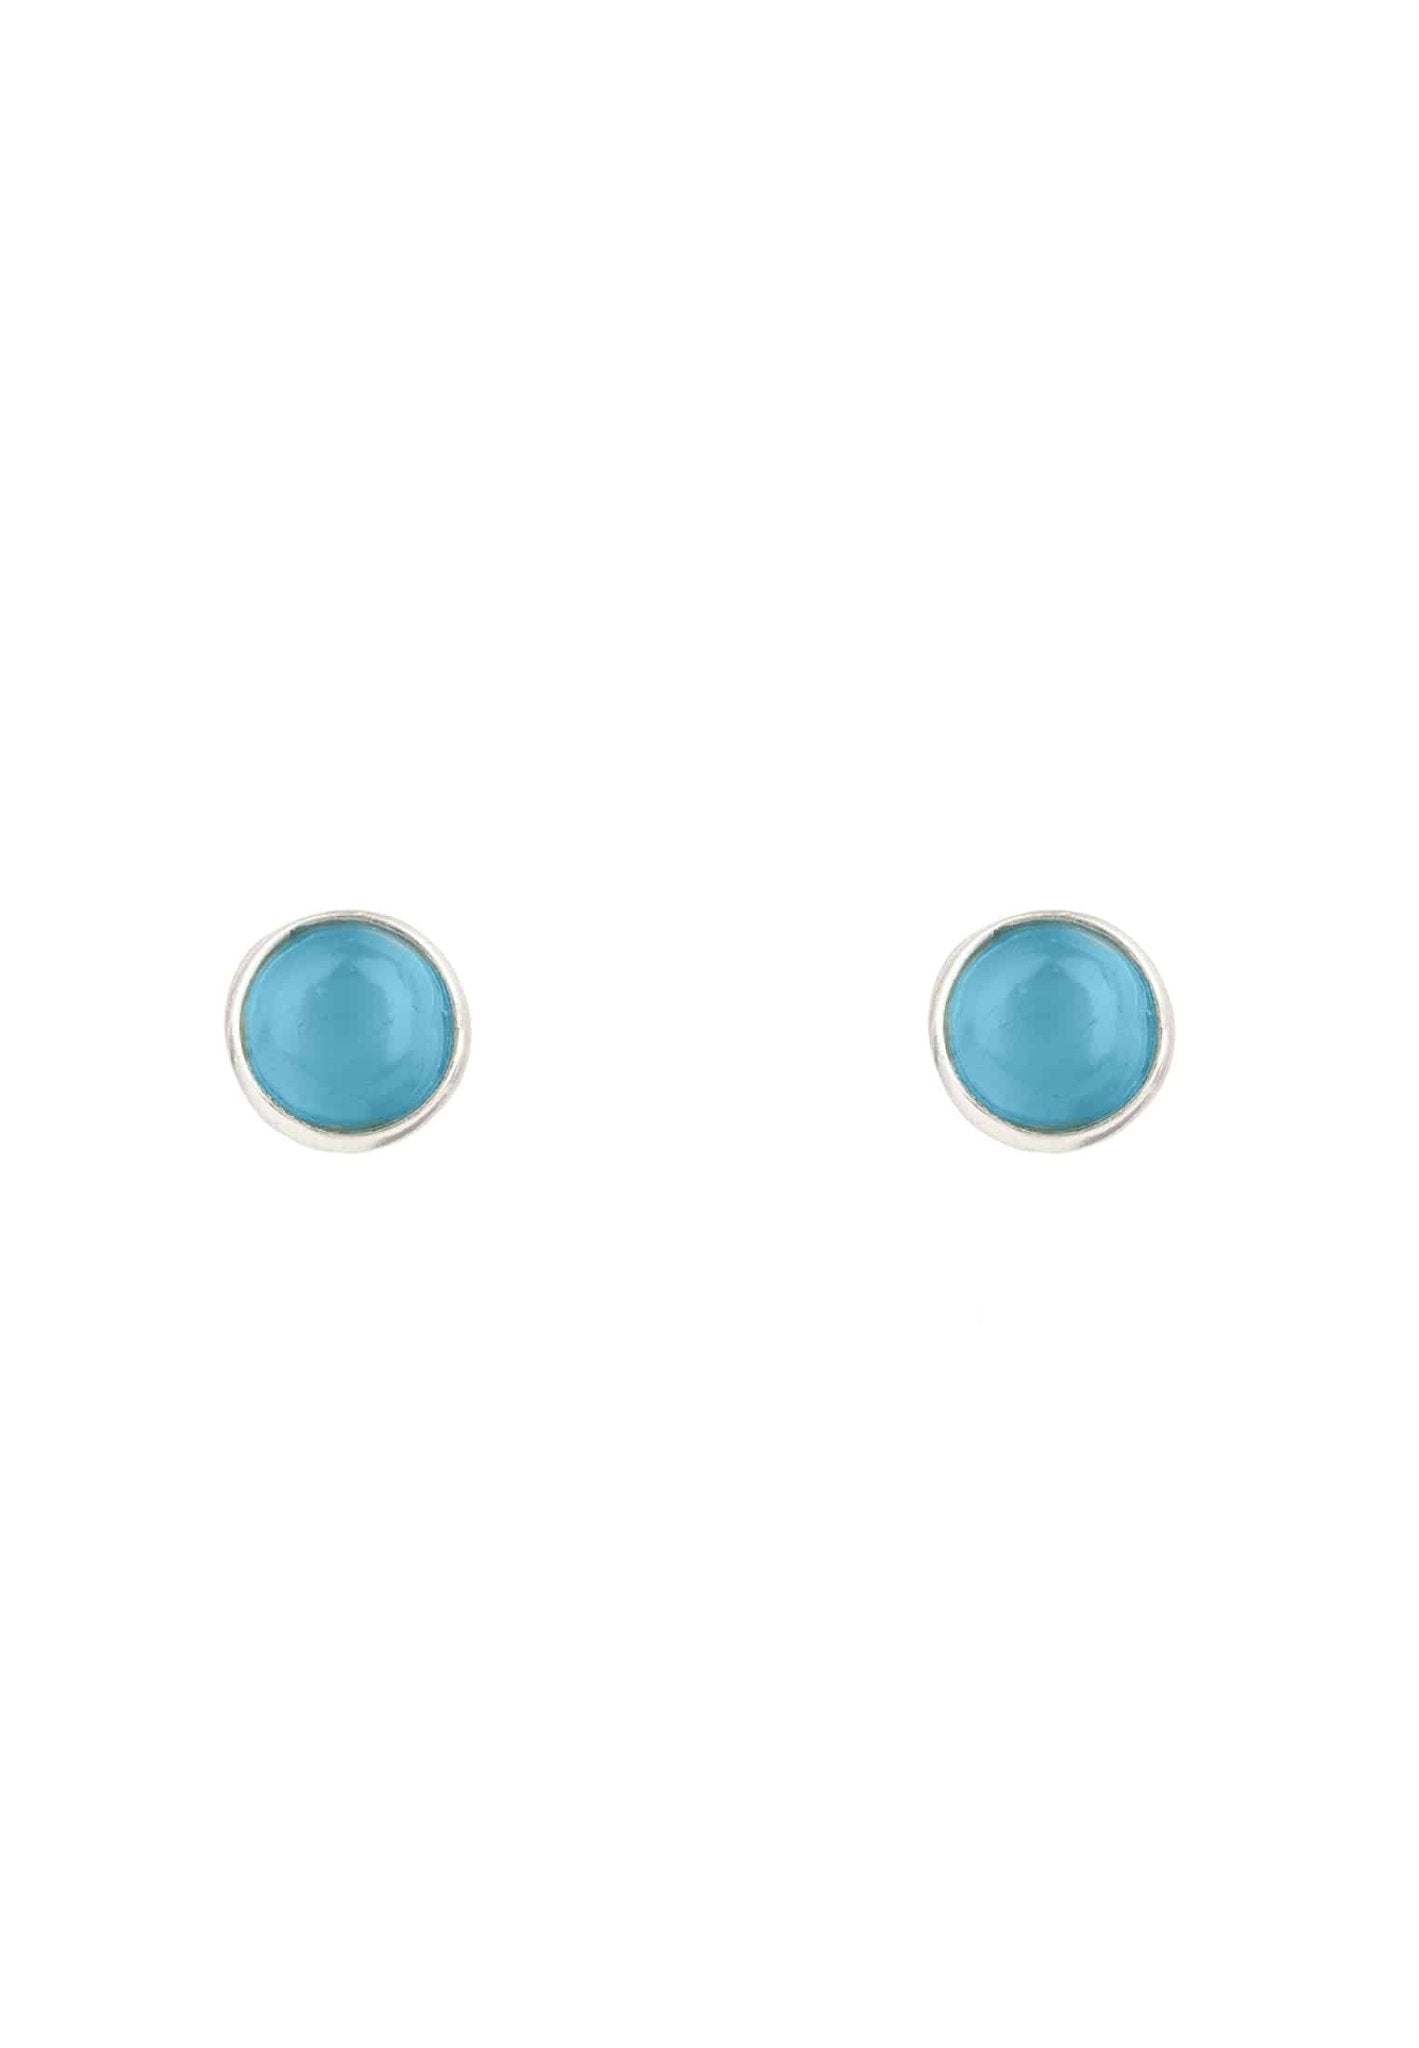 Petite Gemstone Earrings Silver Turquoise - LATELITA Earrings